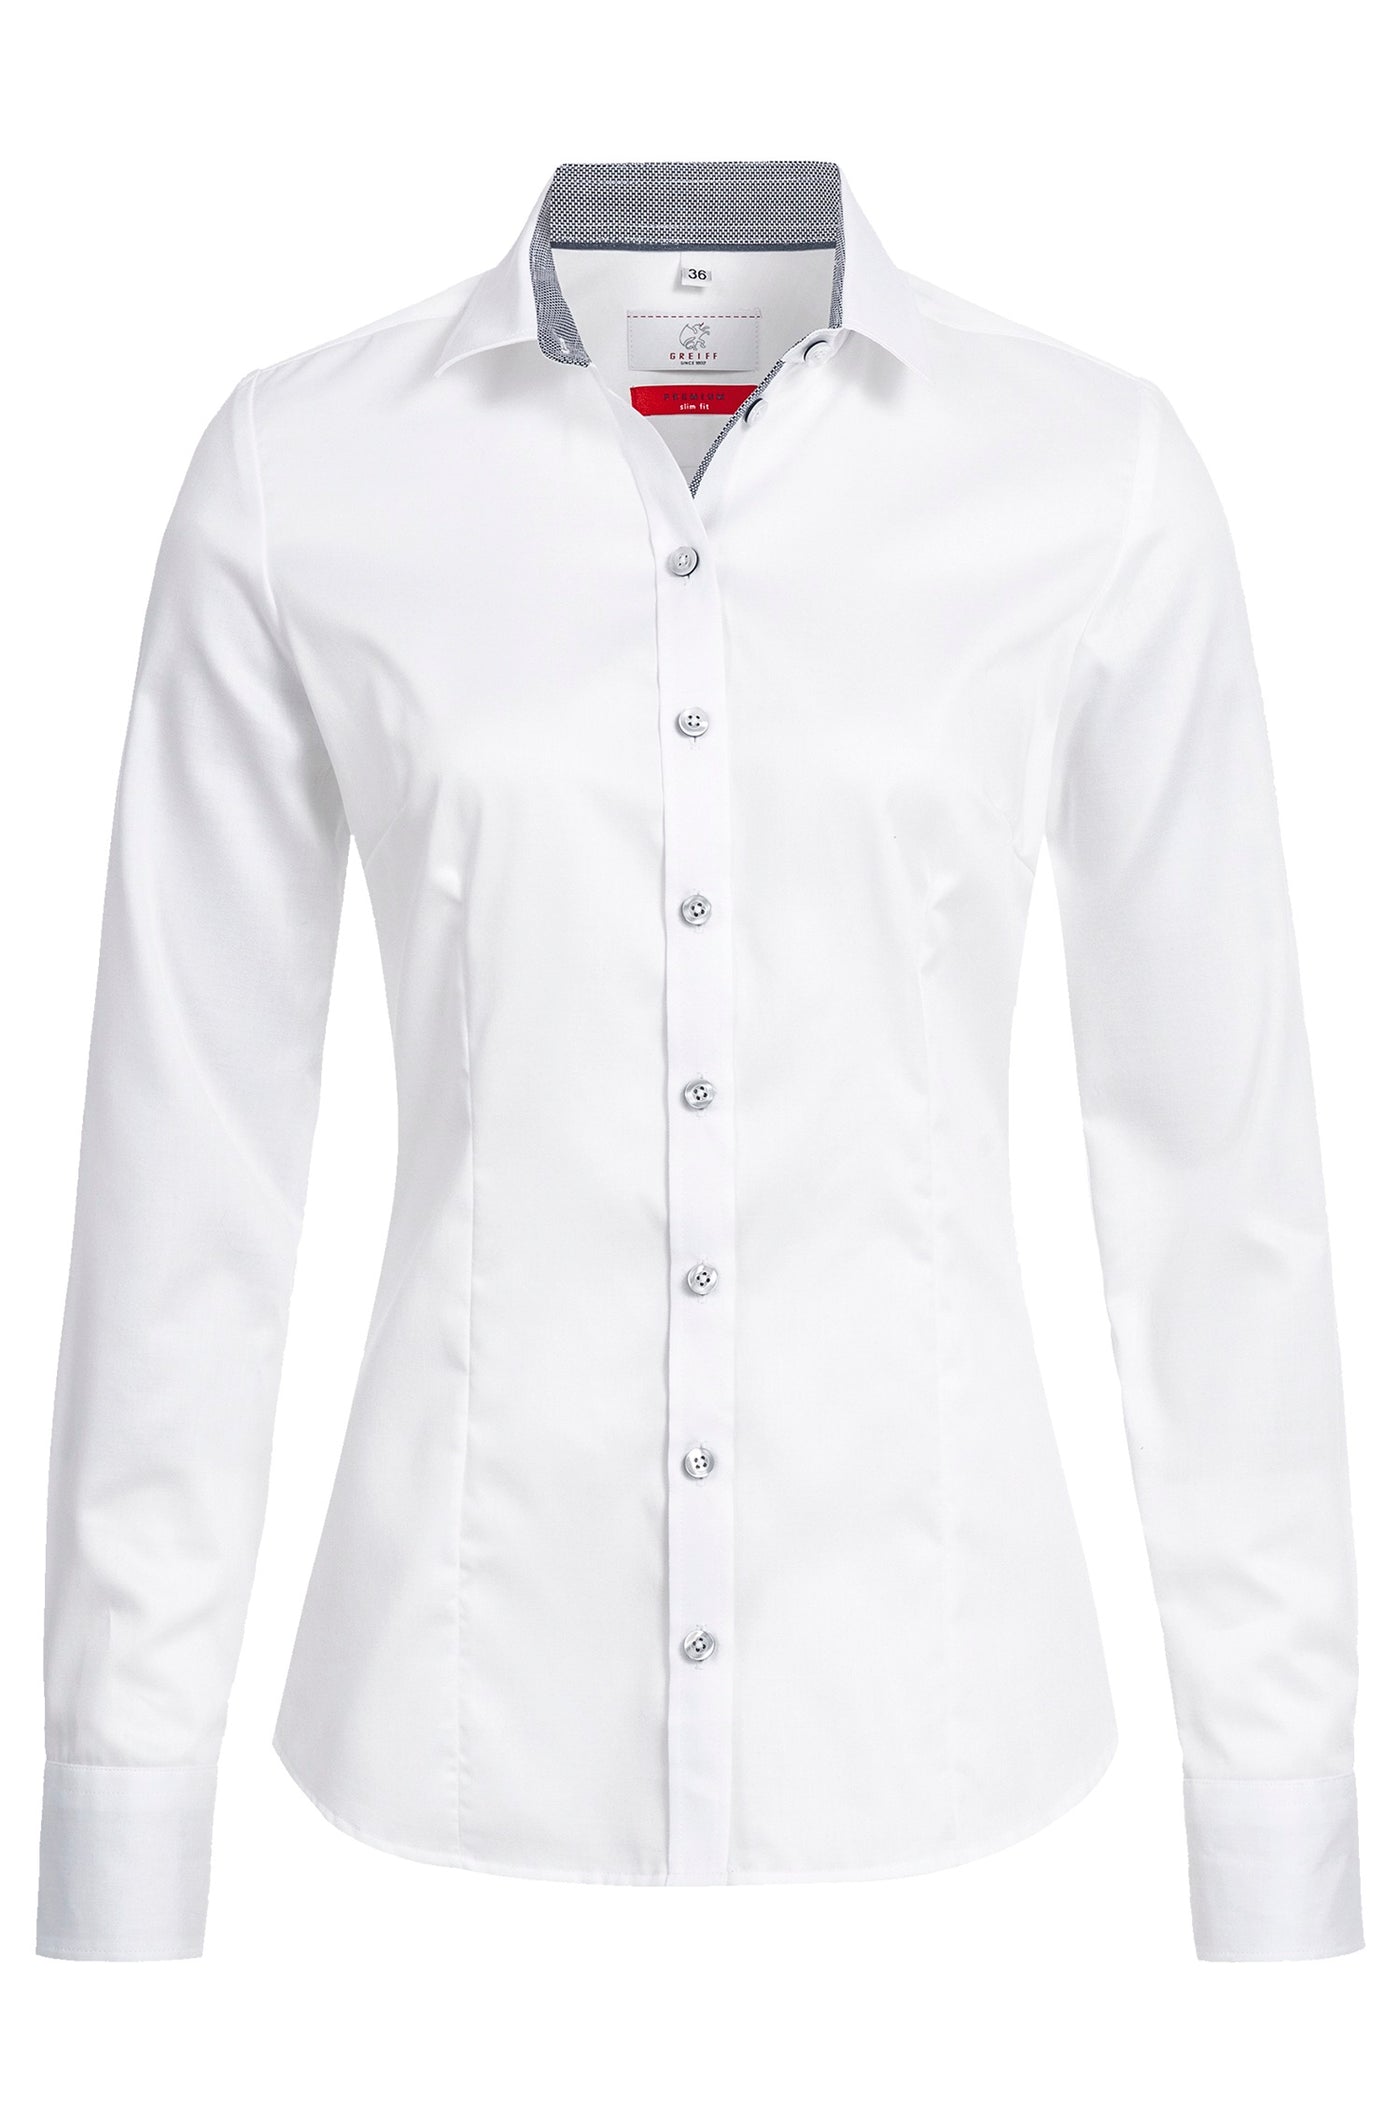 Ladies blouse Premium Slim-Fit / Kentkragen